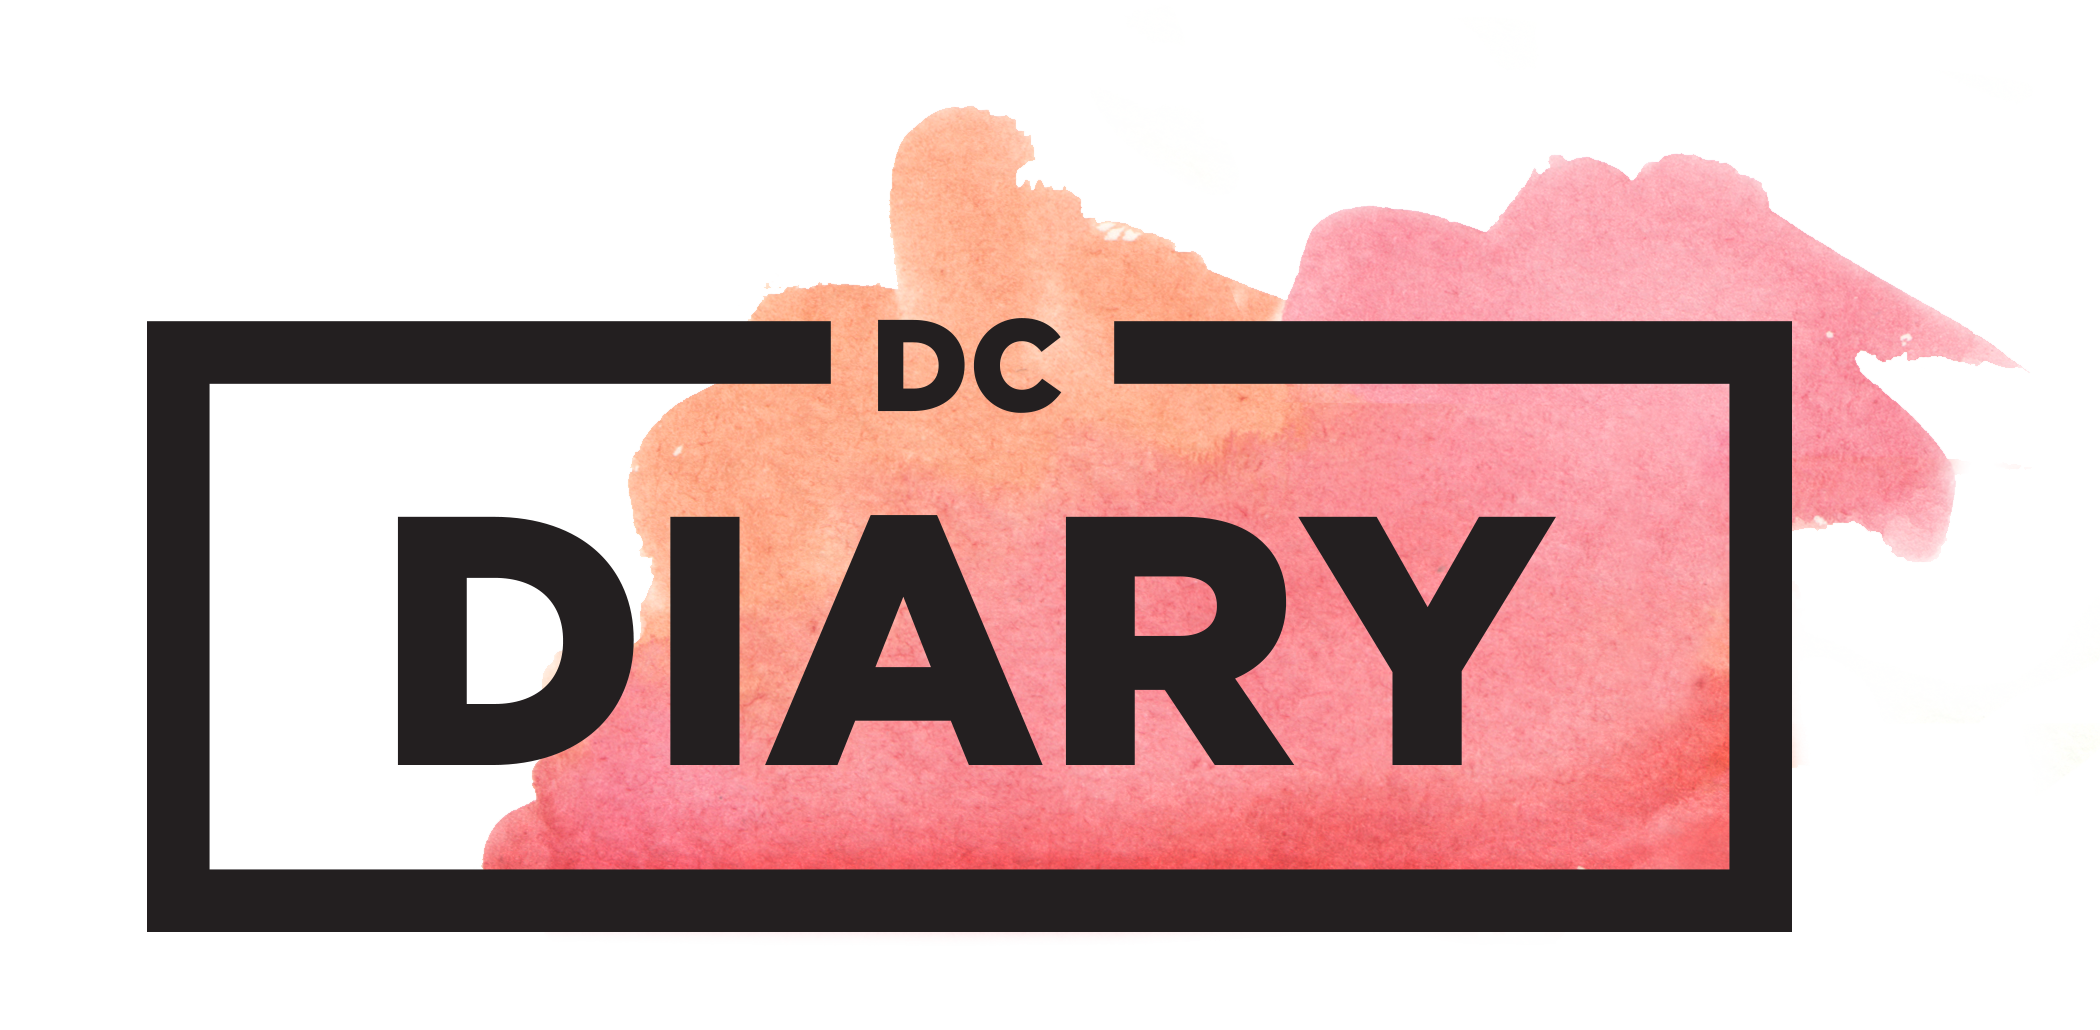 DC Diary Logo